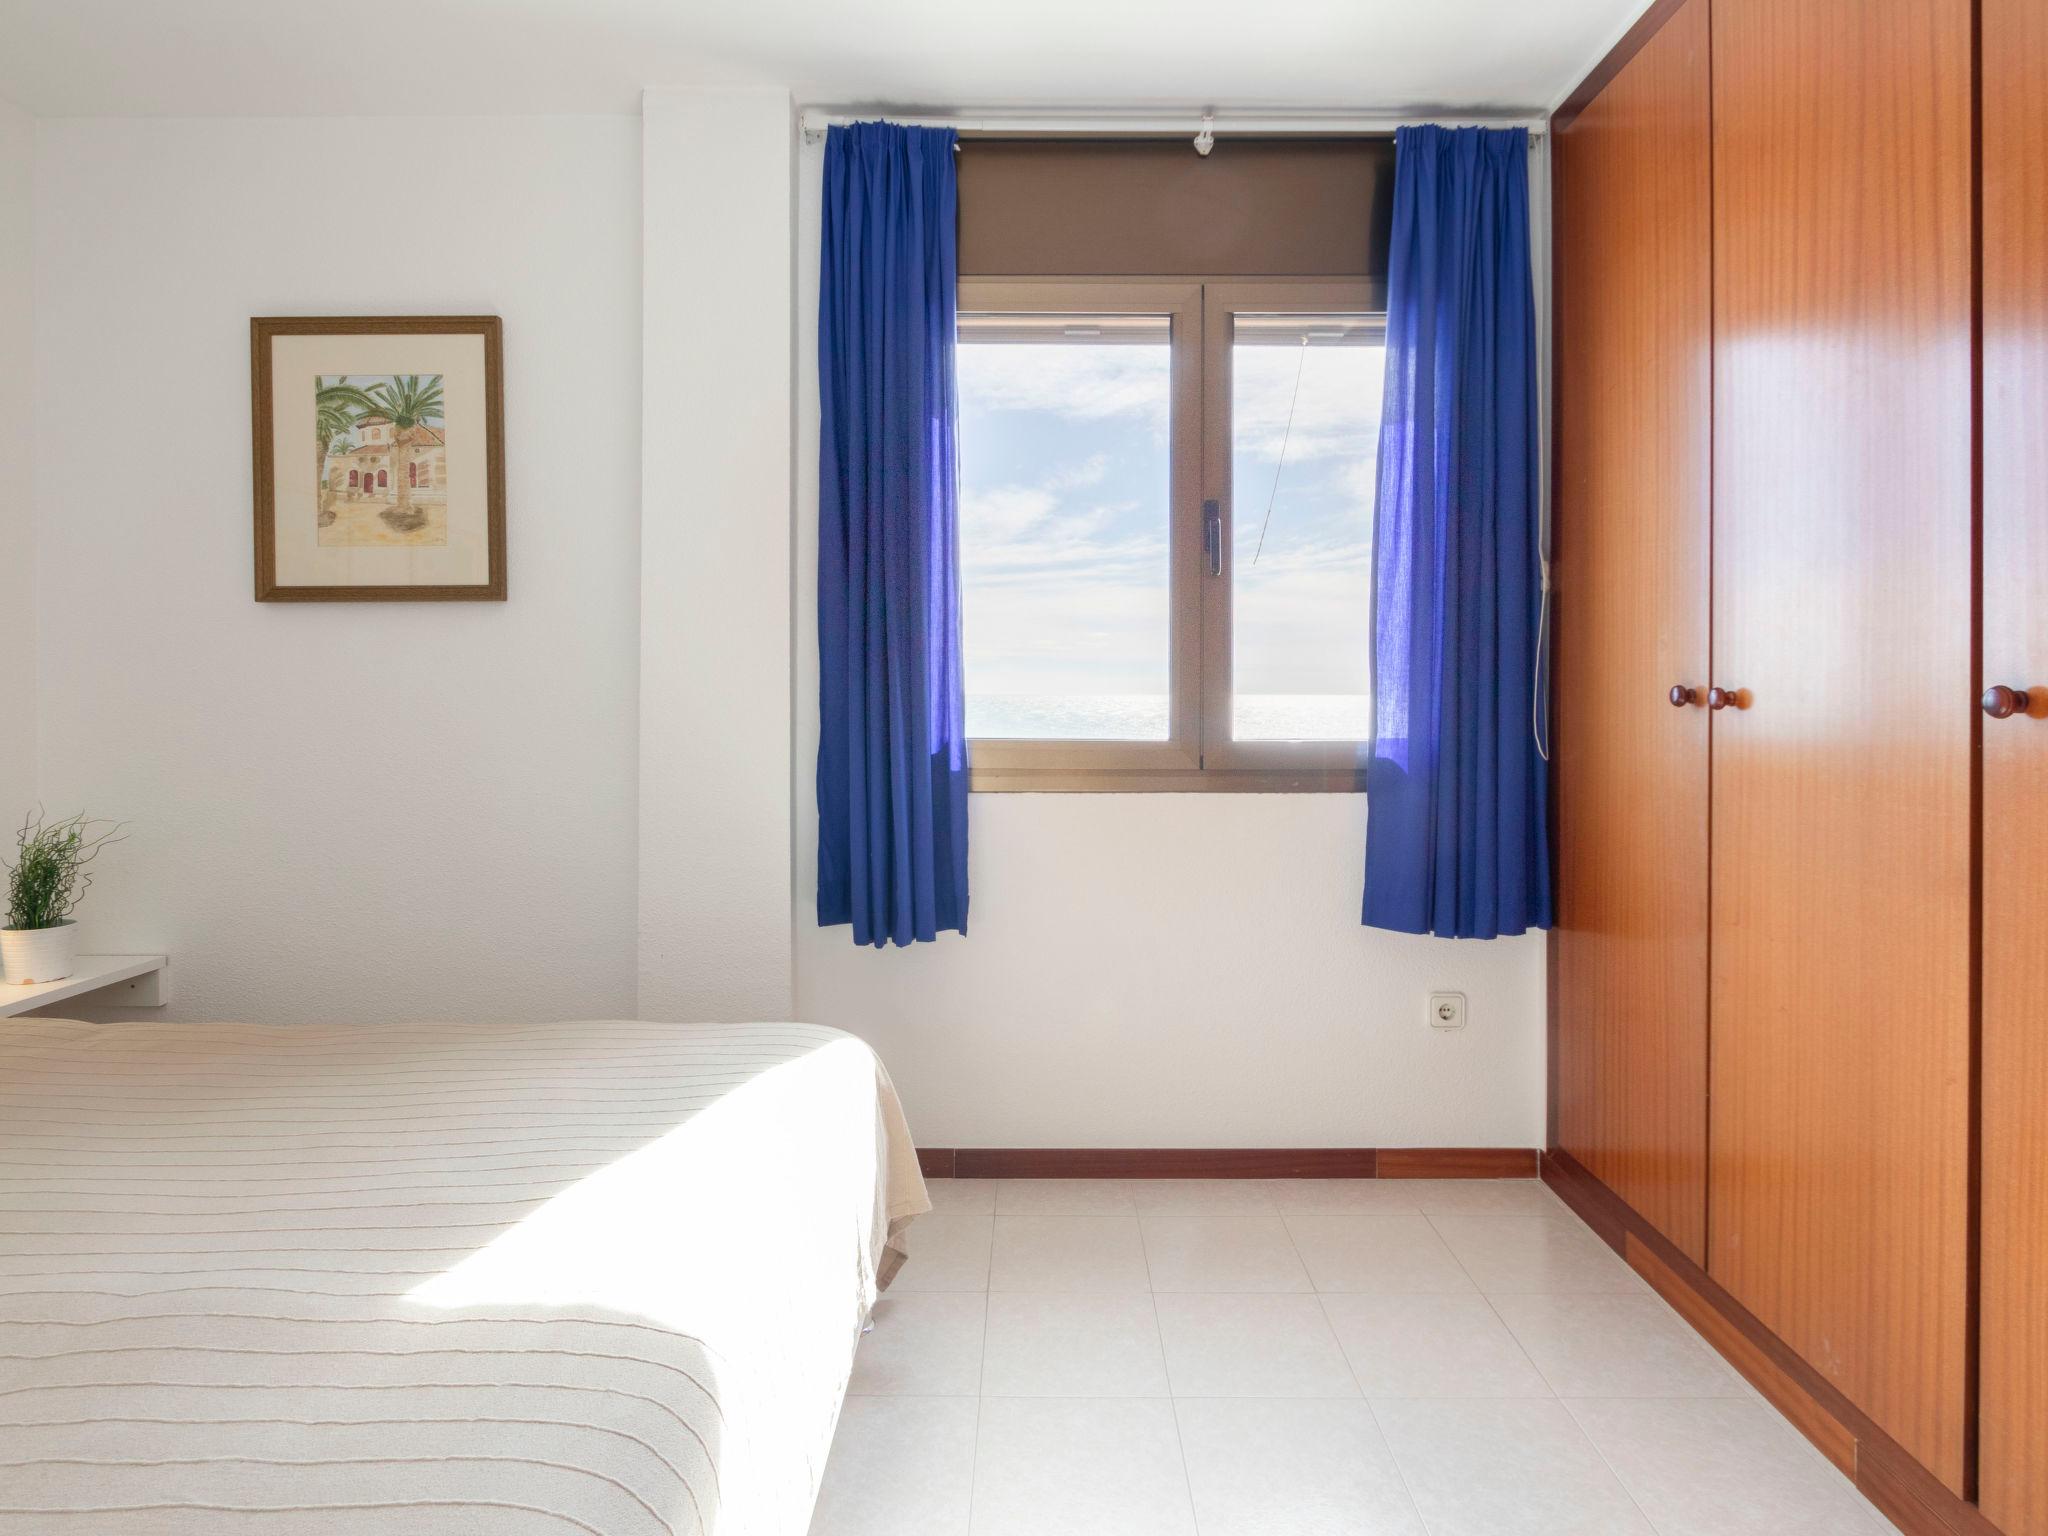 Photo 14 - Appartement de 3 chambres à Torredembarra avec piscine et vues à la mer